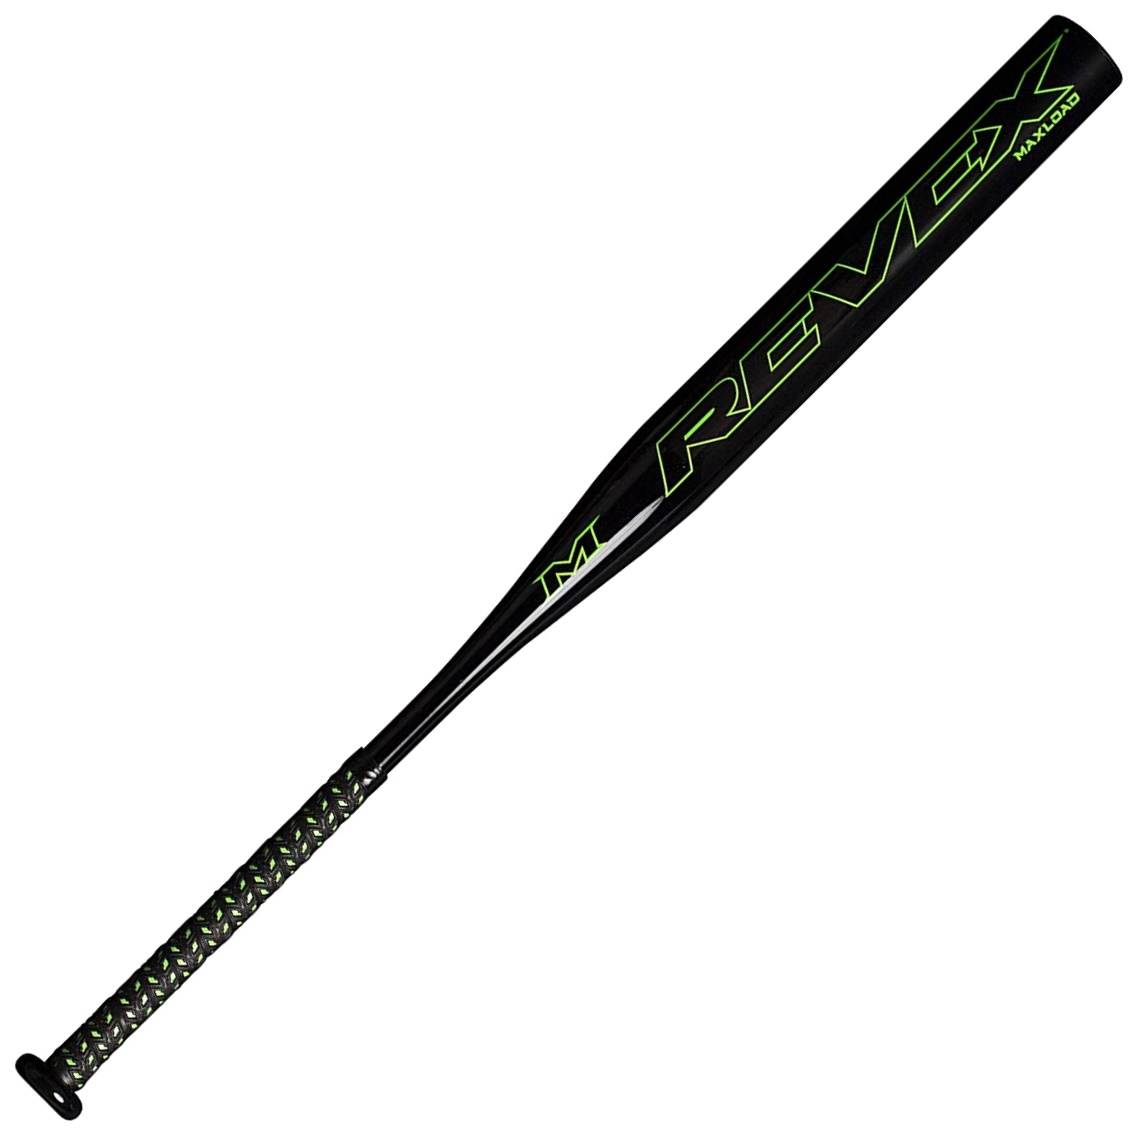 miken-rev-ex-14-one-piece-maxload-slowpitch-softball-bat-34-inch-30-oz MREV21-3-30 Miken  The Miken 2021 Rev-Ex Maxload all association bat delivers a solid